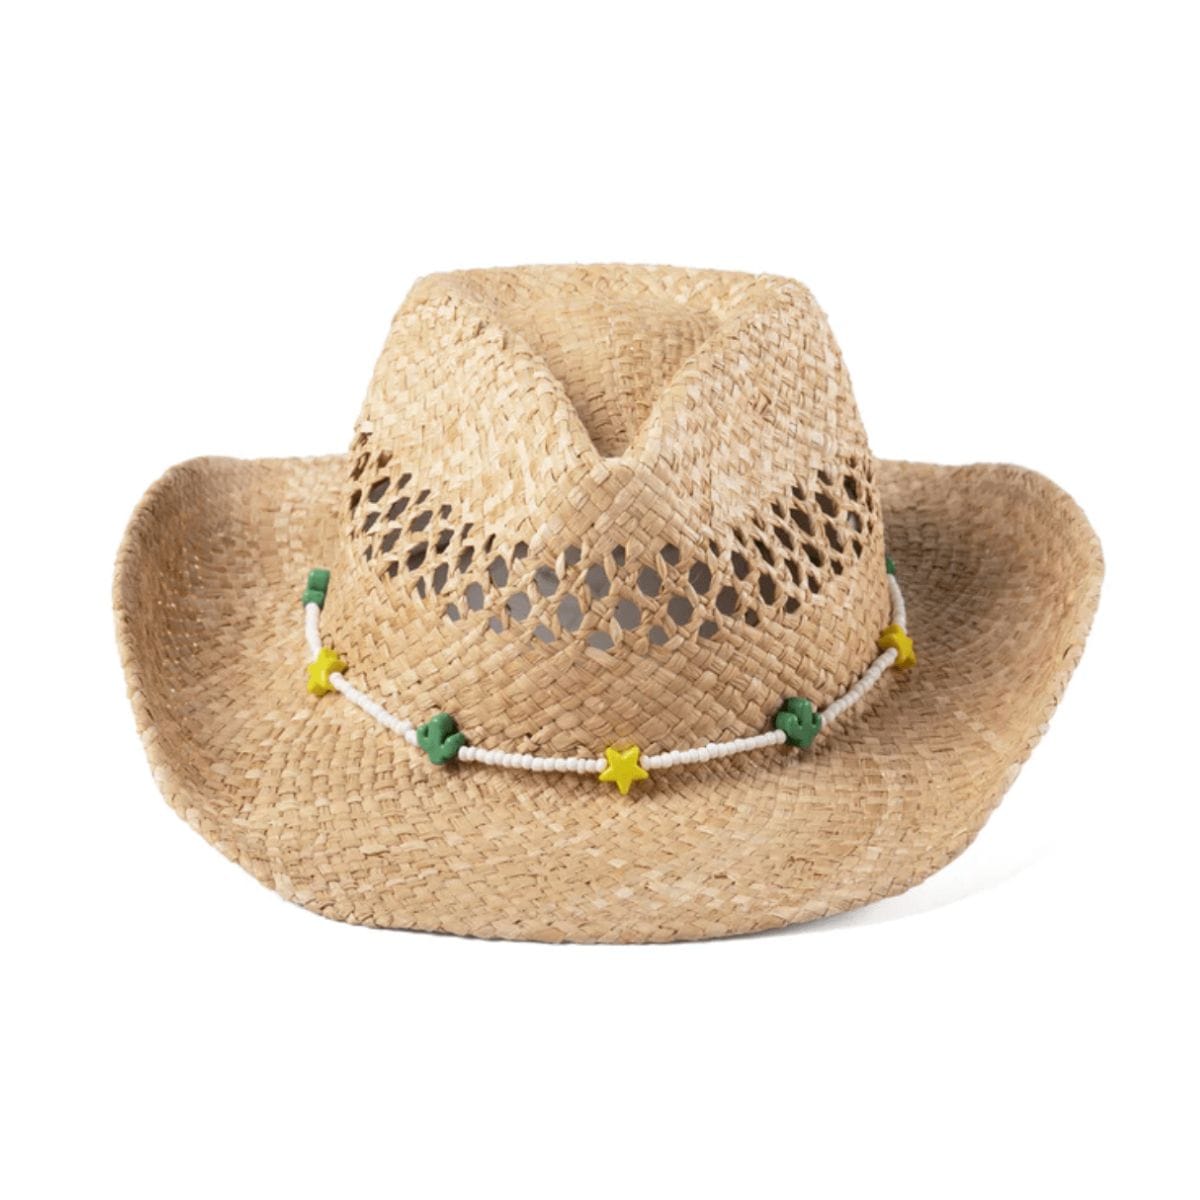 The Desert Cowboy Hat (Star)